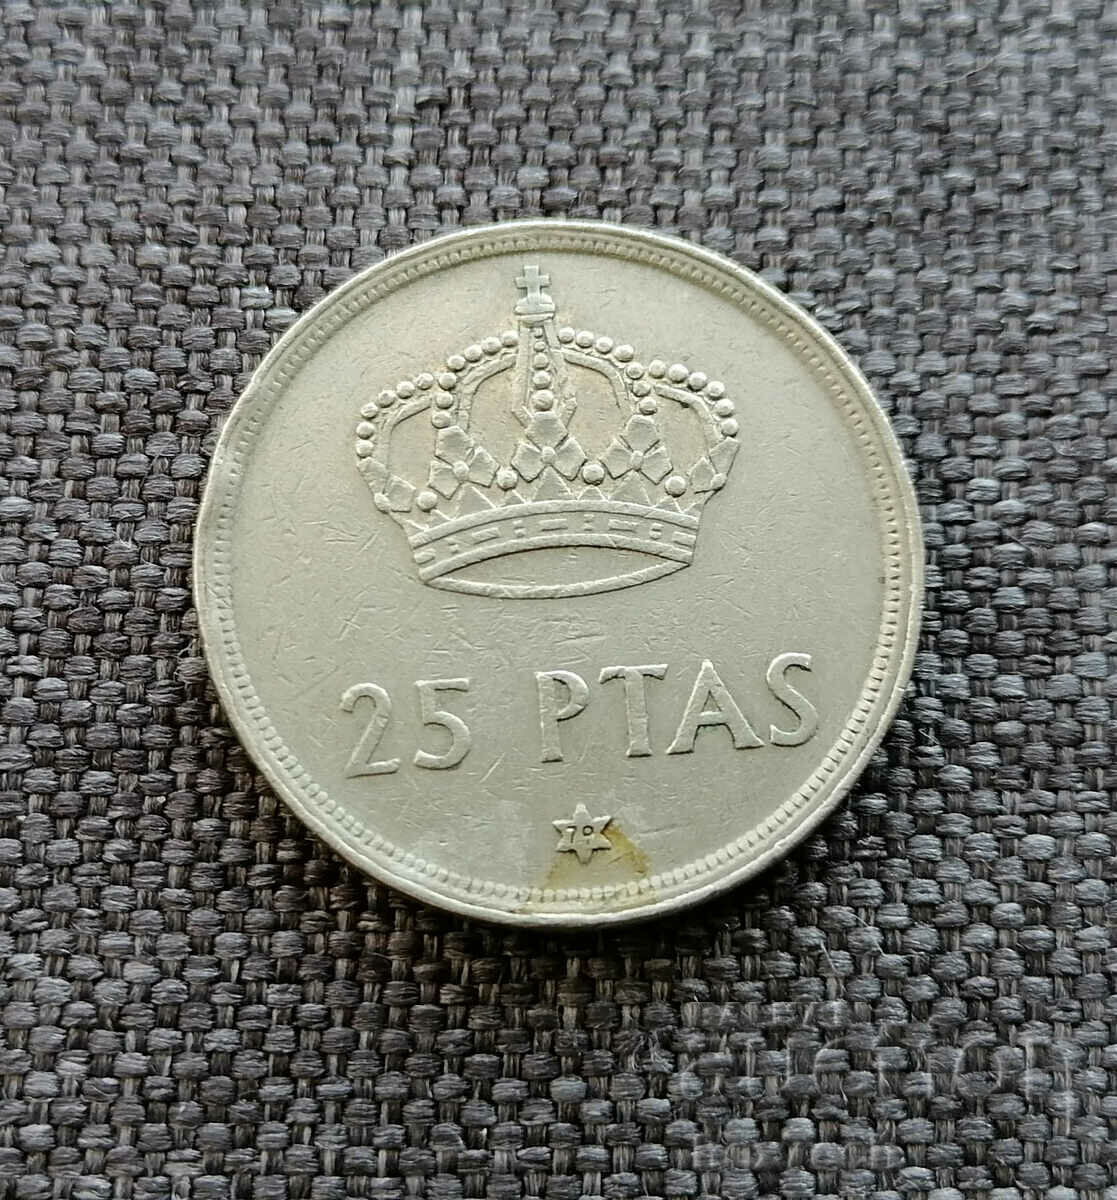 ❤️ ⭐ Spain 1975 25 pesetas ⭐ ❤️